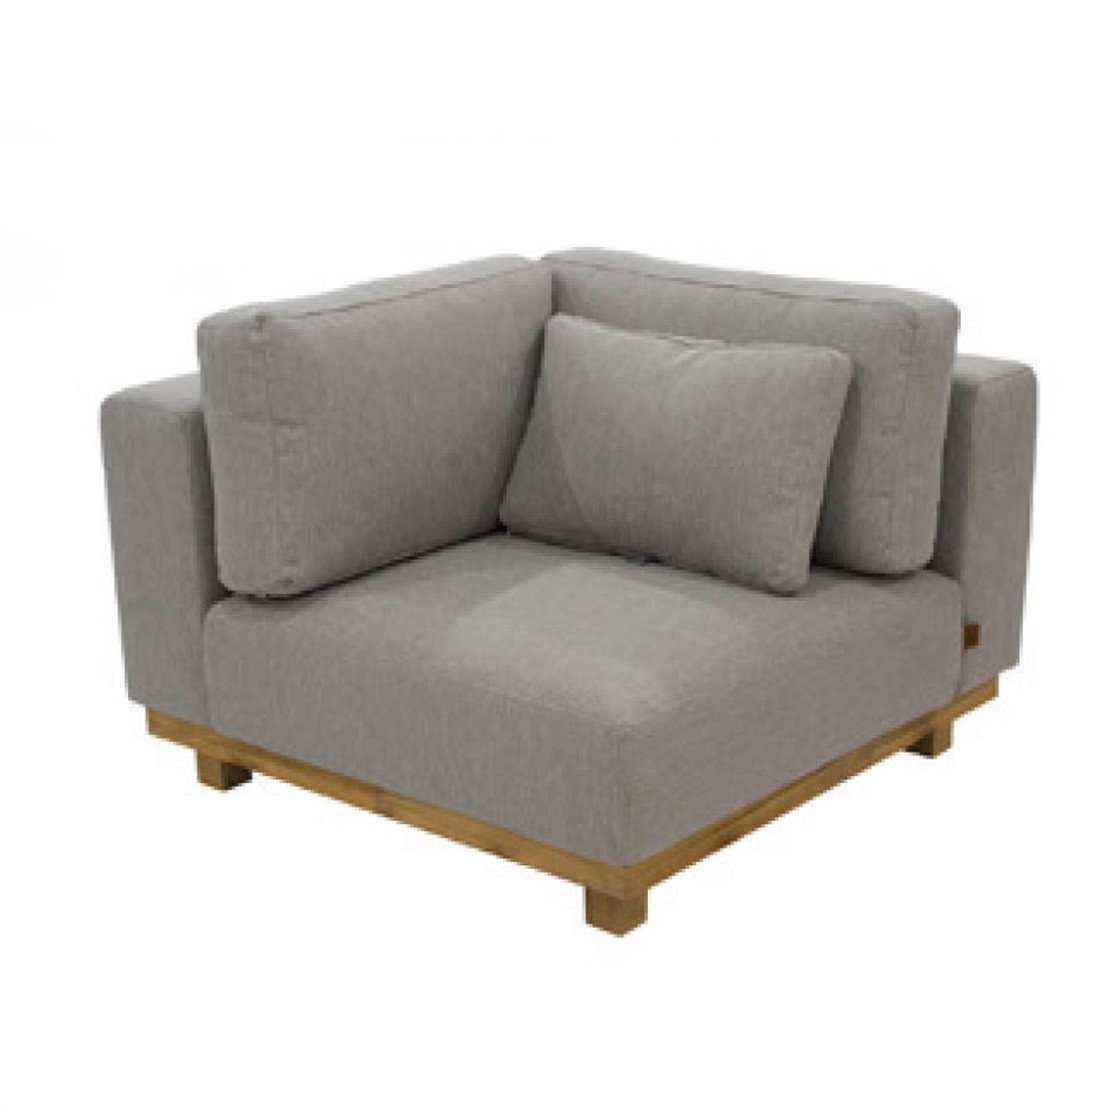 Paradiso upholstery corner teak with 4 cushions